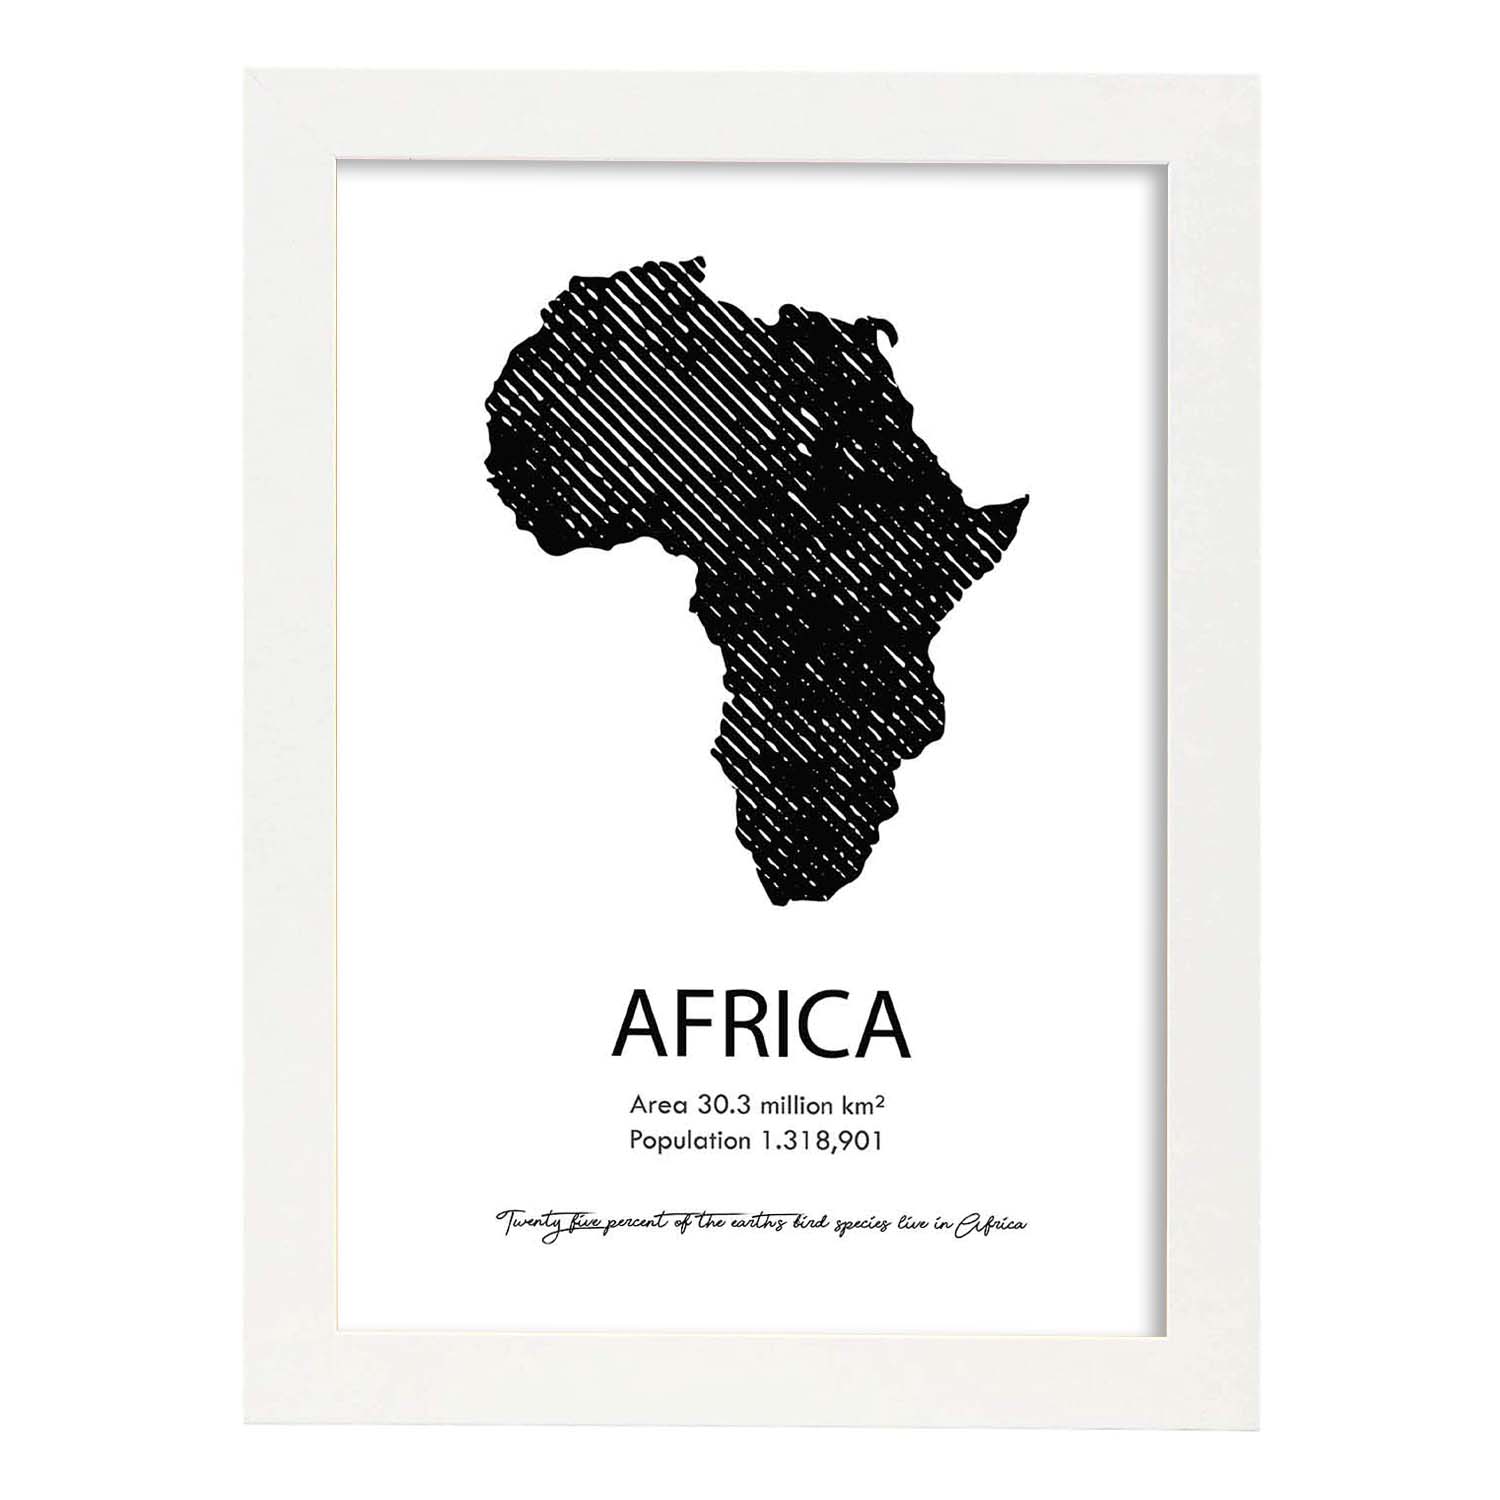 Poster de Africa. Láminas de paises y continentes del mundo.-Artwork-Nacnic-A4-Marco Blanco-Nacnic Estudio SL